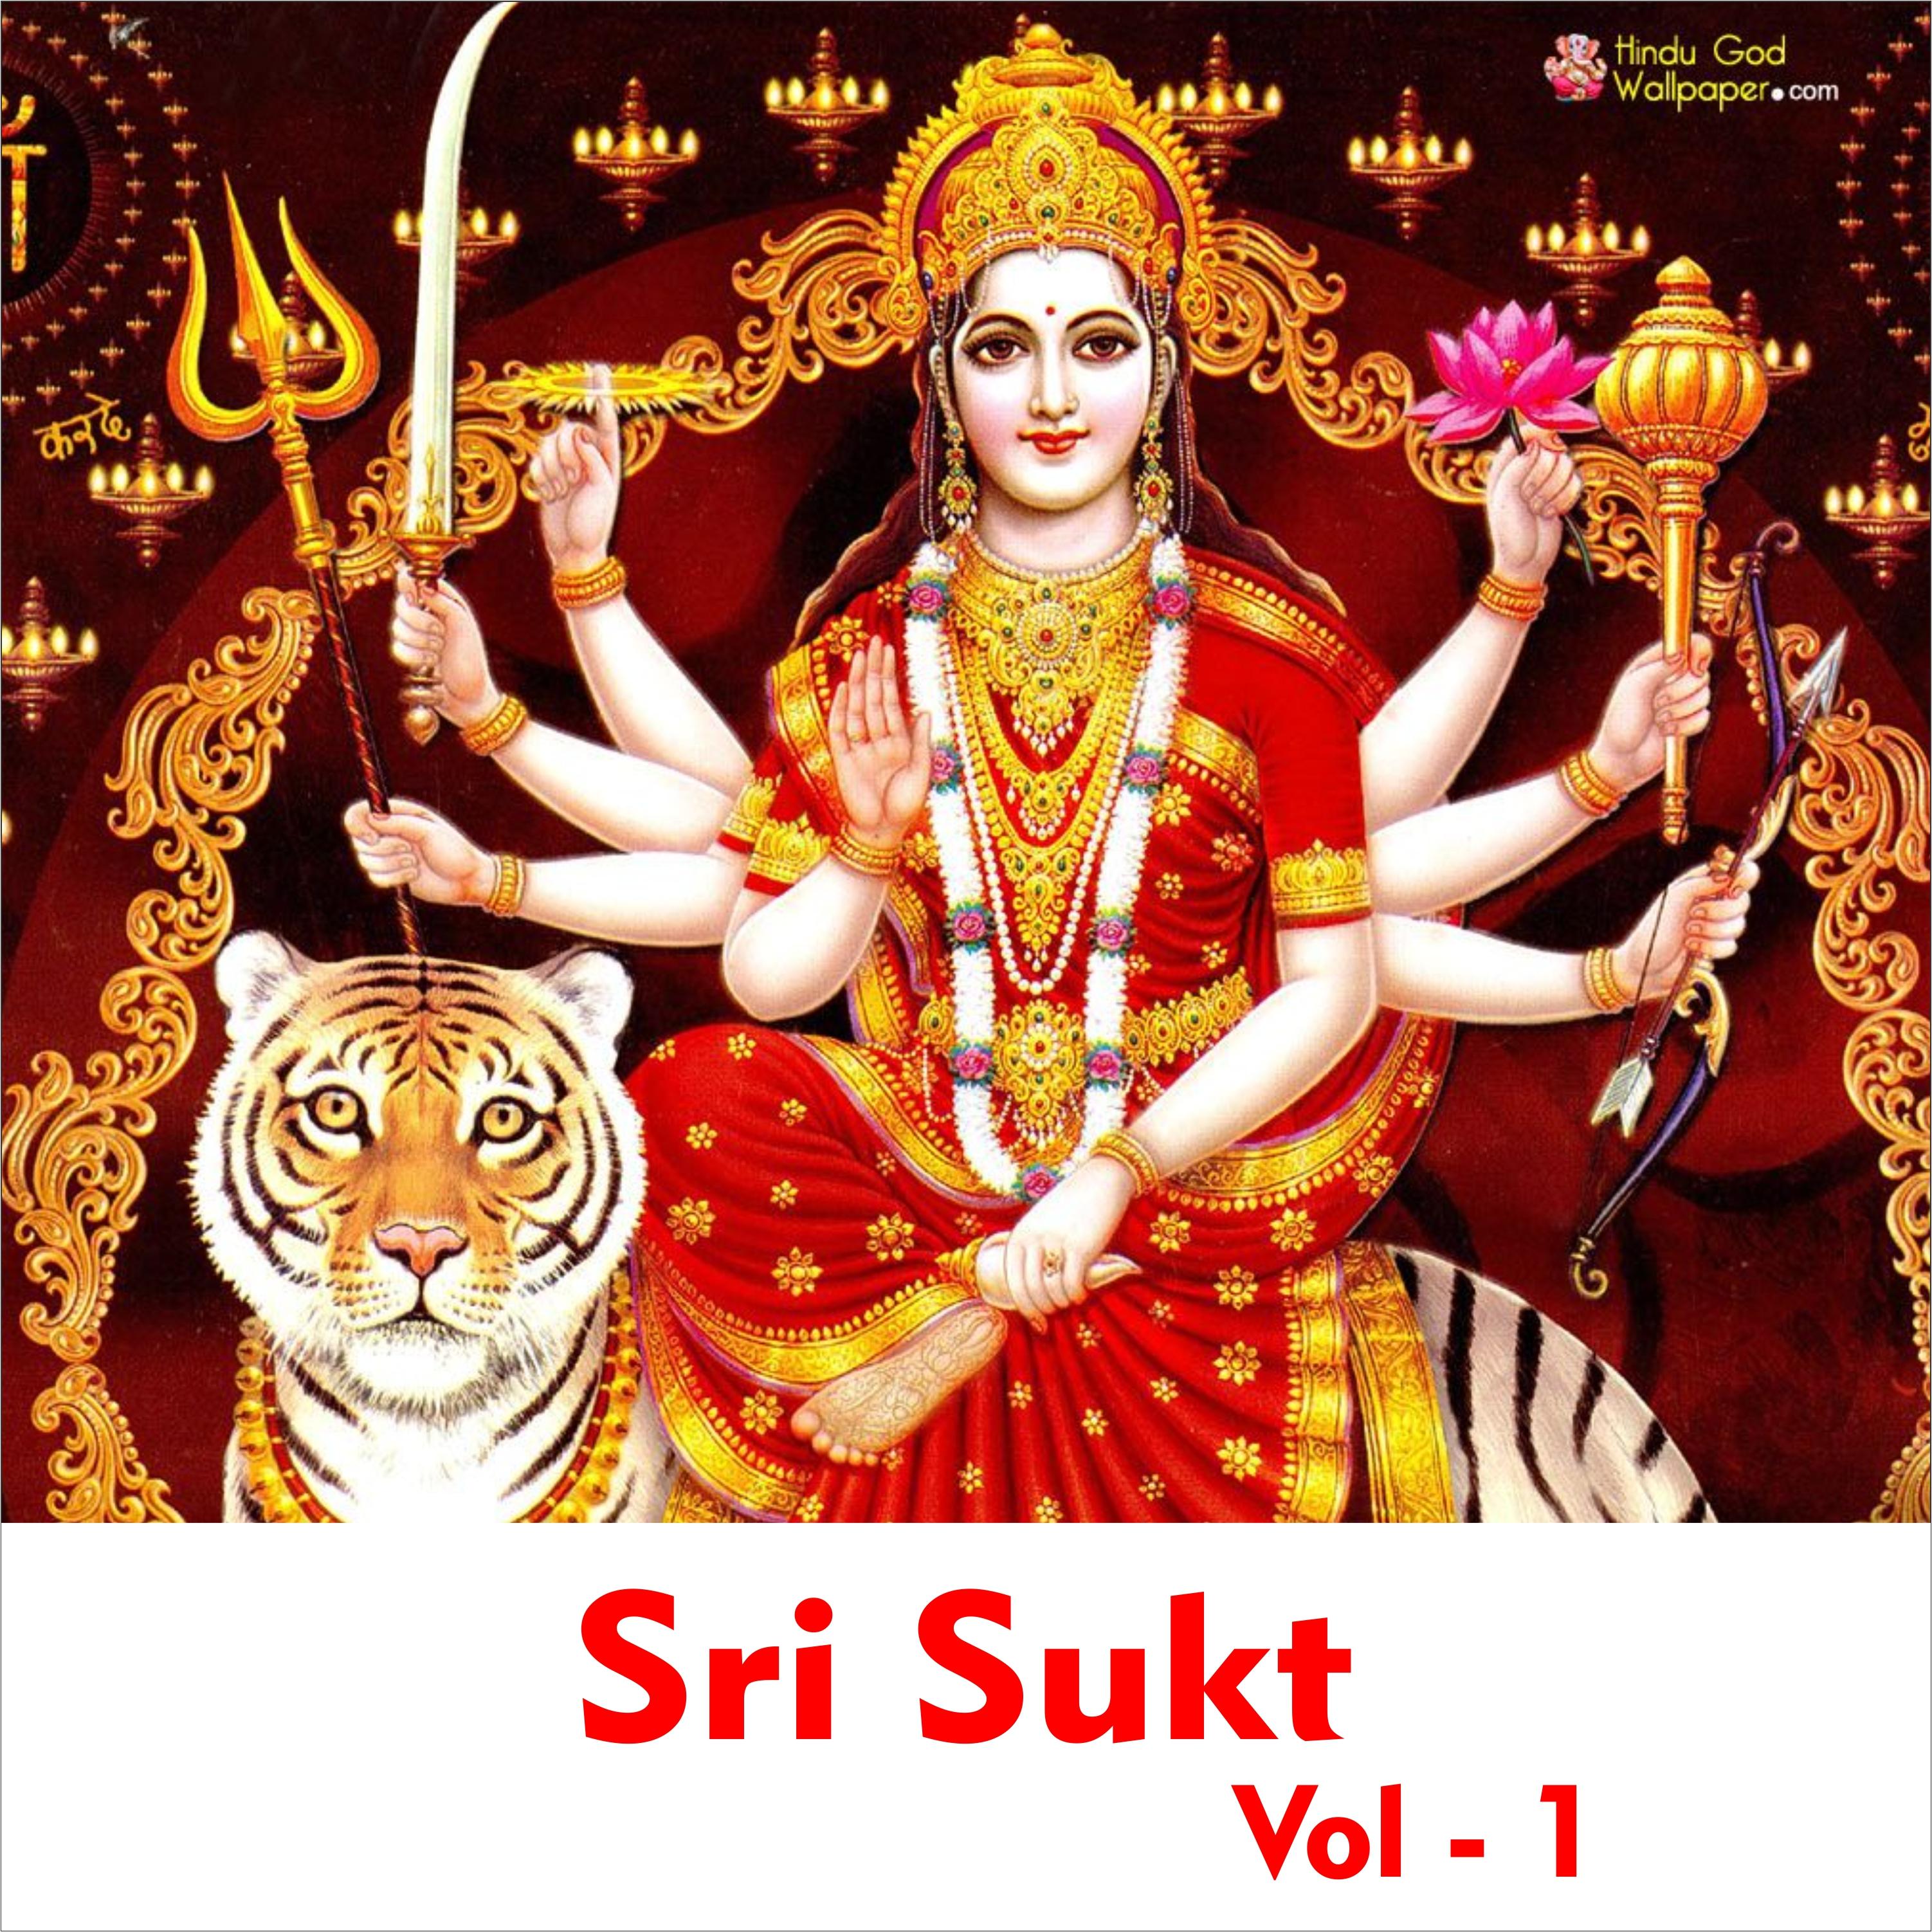 Sri Sukt, Vol. 1